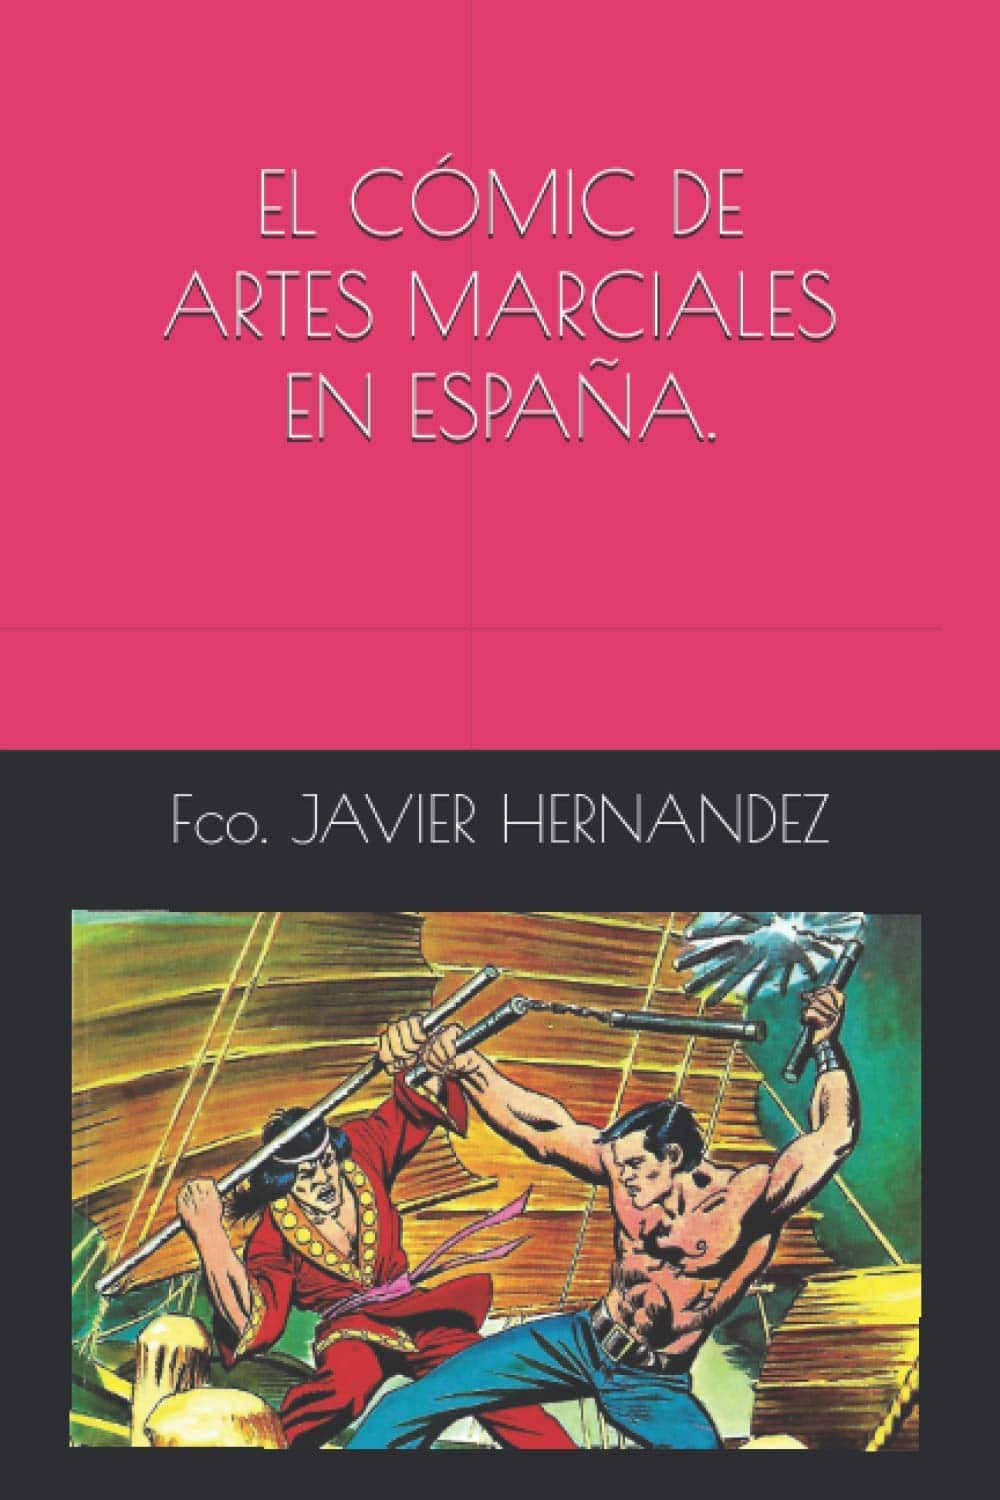 El comic de artes marciales en Espana scaled